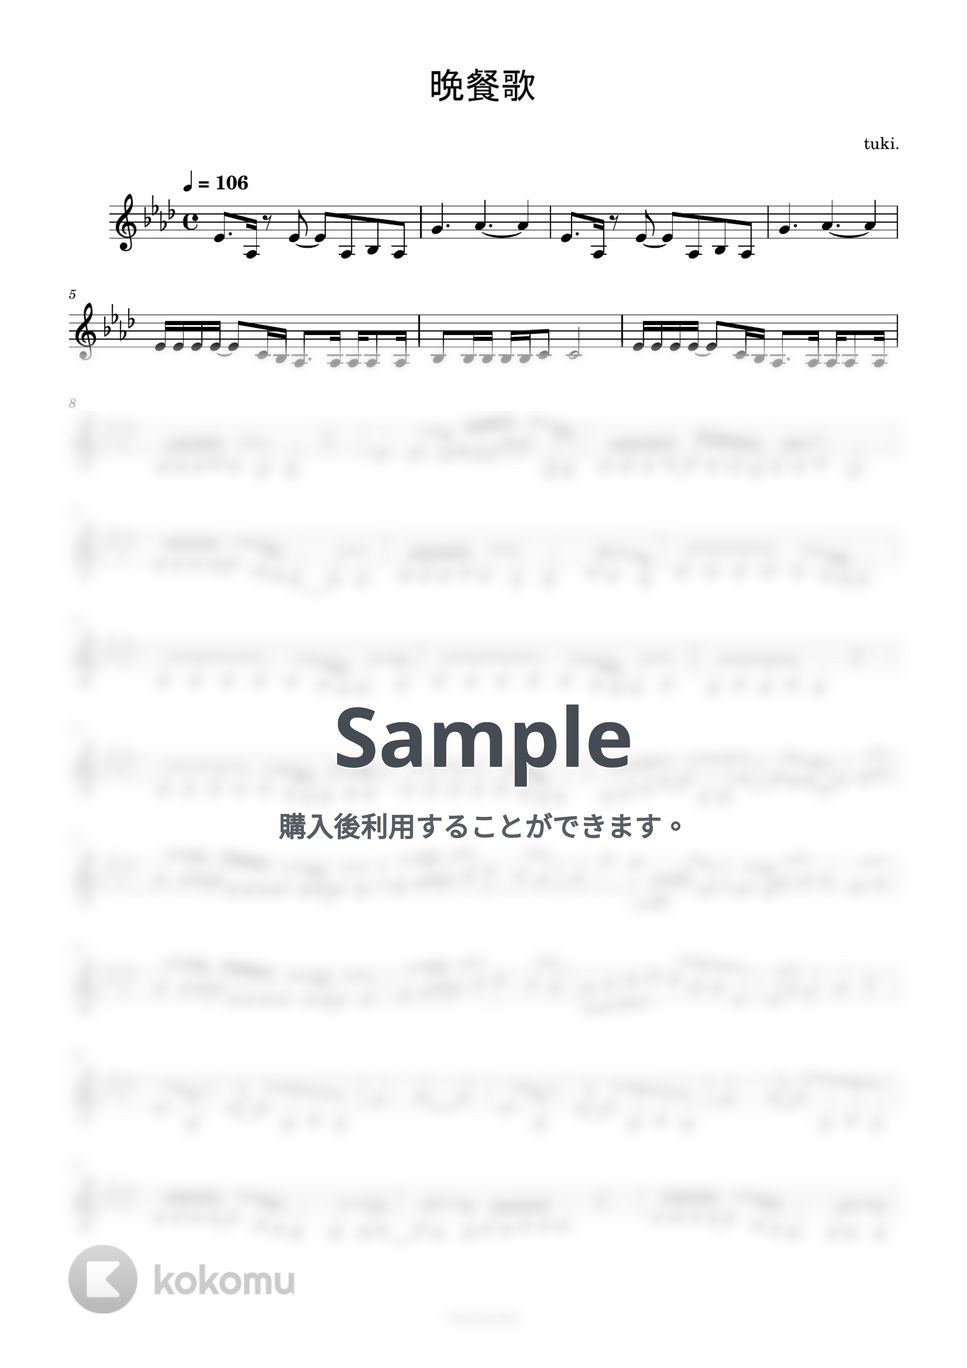 tuki. - 晩餐歌 (晩餐歌/tuki/メロディー譜/中級/ピアノ/C管楽器対応) by utamenma